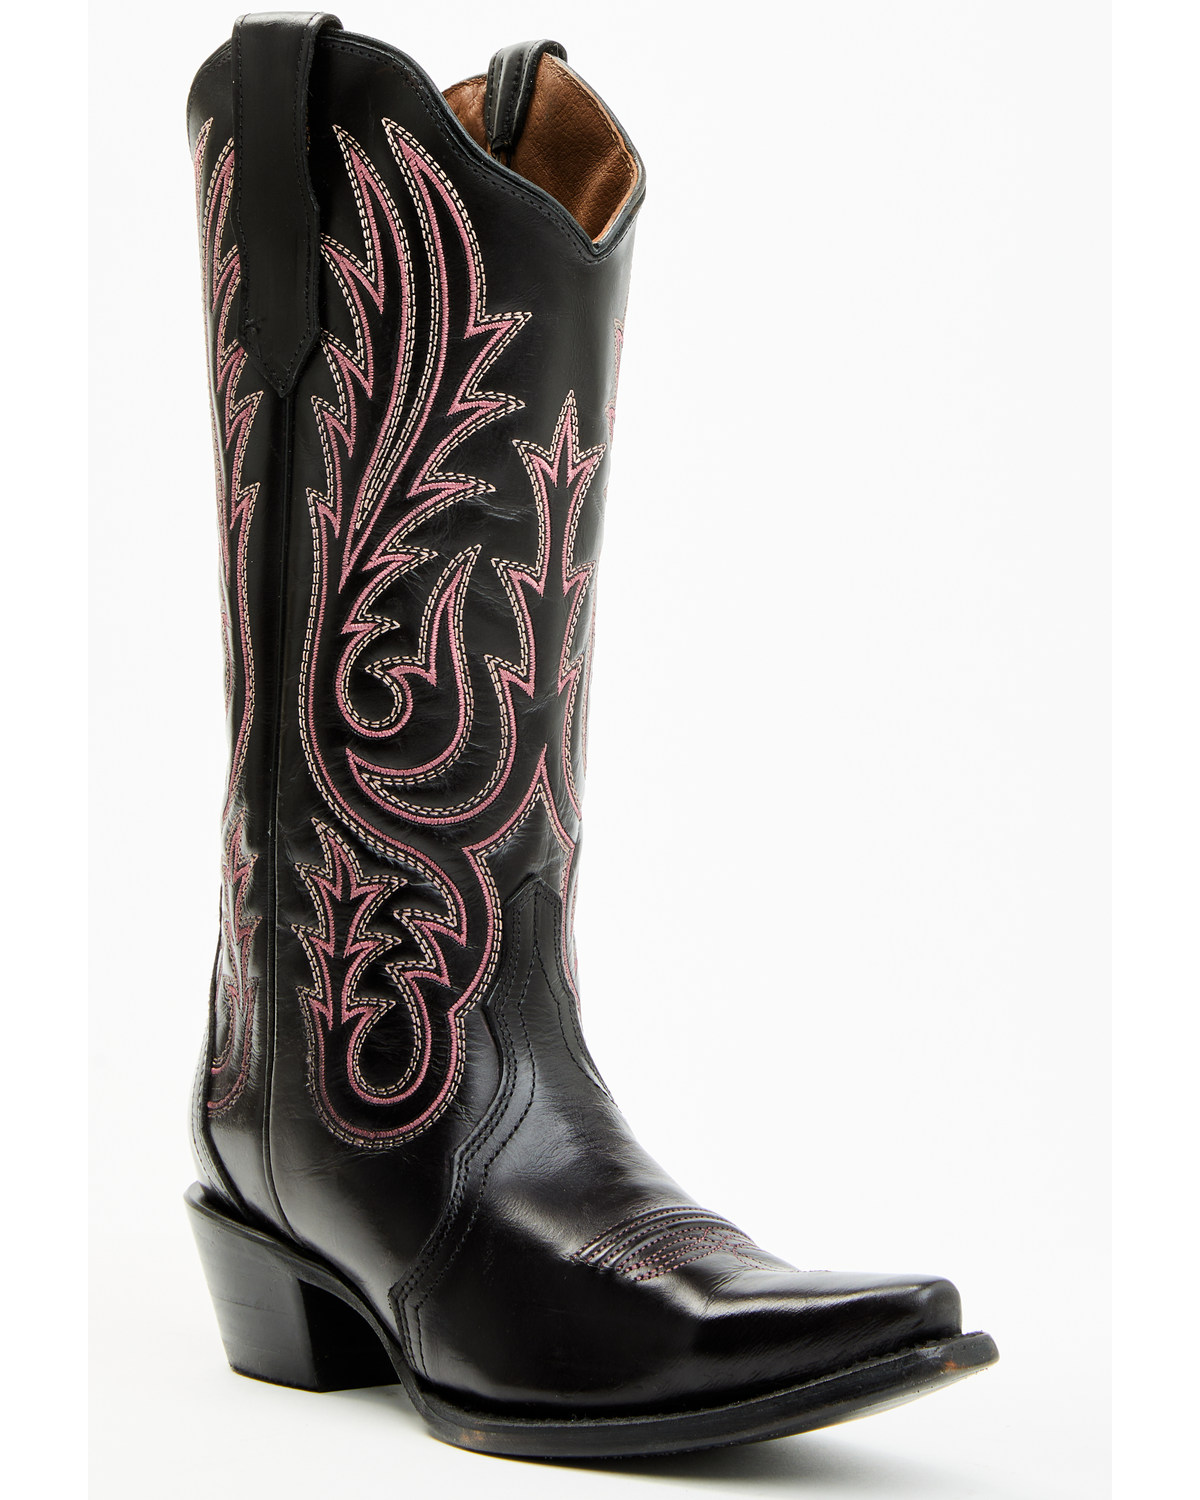 Circle G Women's Western Boots - Snip Toe